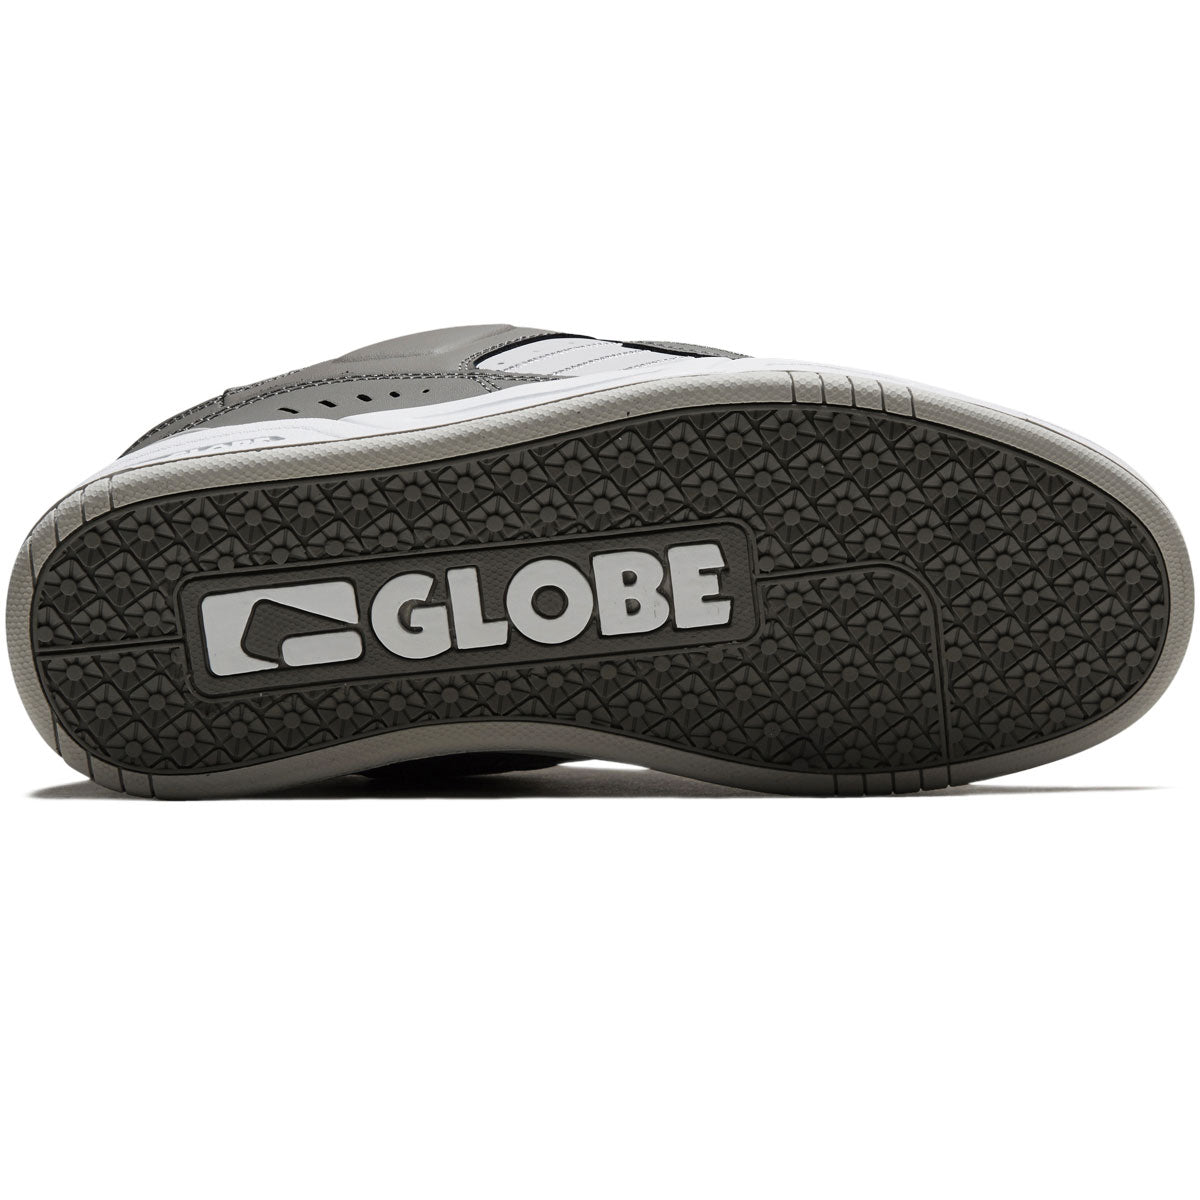 Globe Fusion Shoes - Grey/Fade image 4